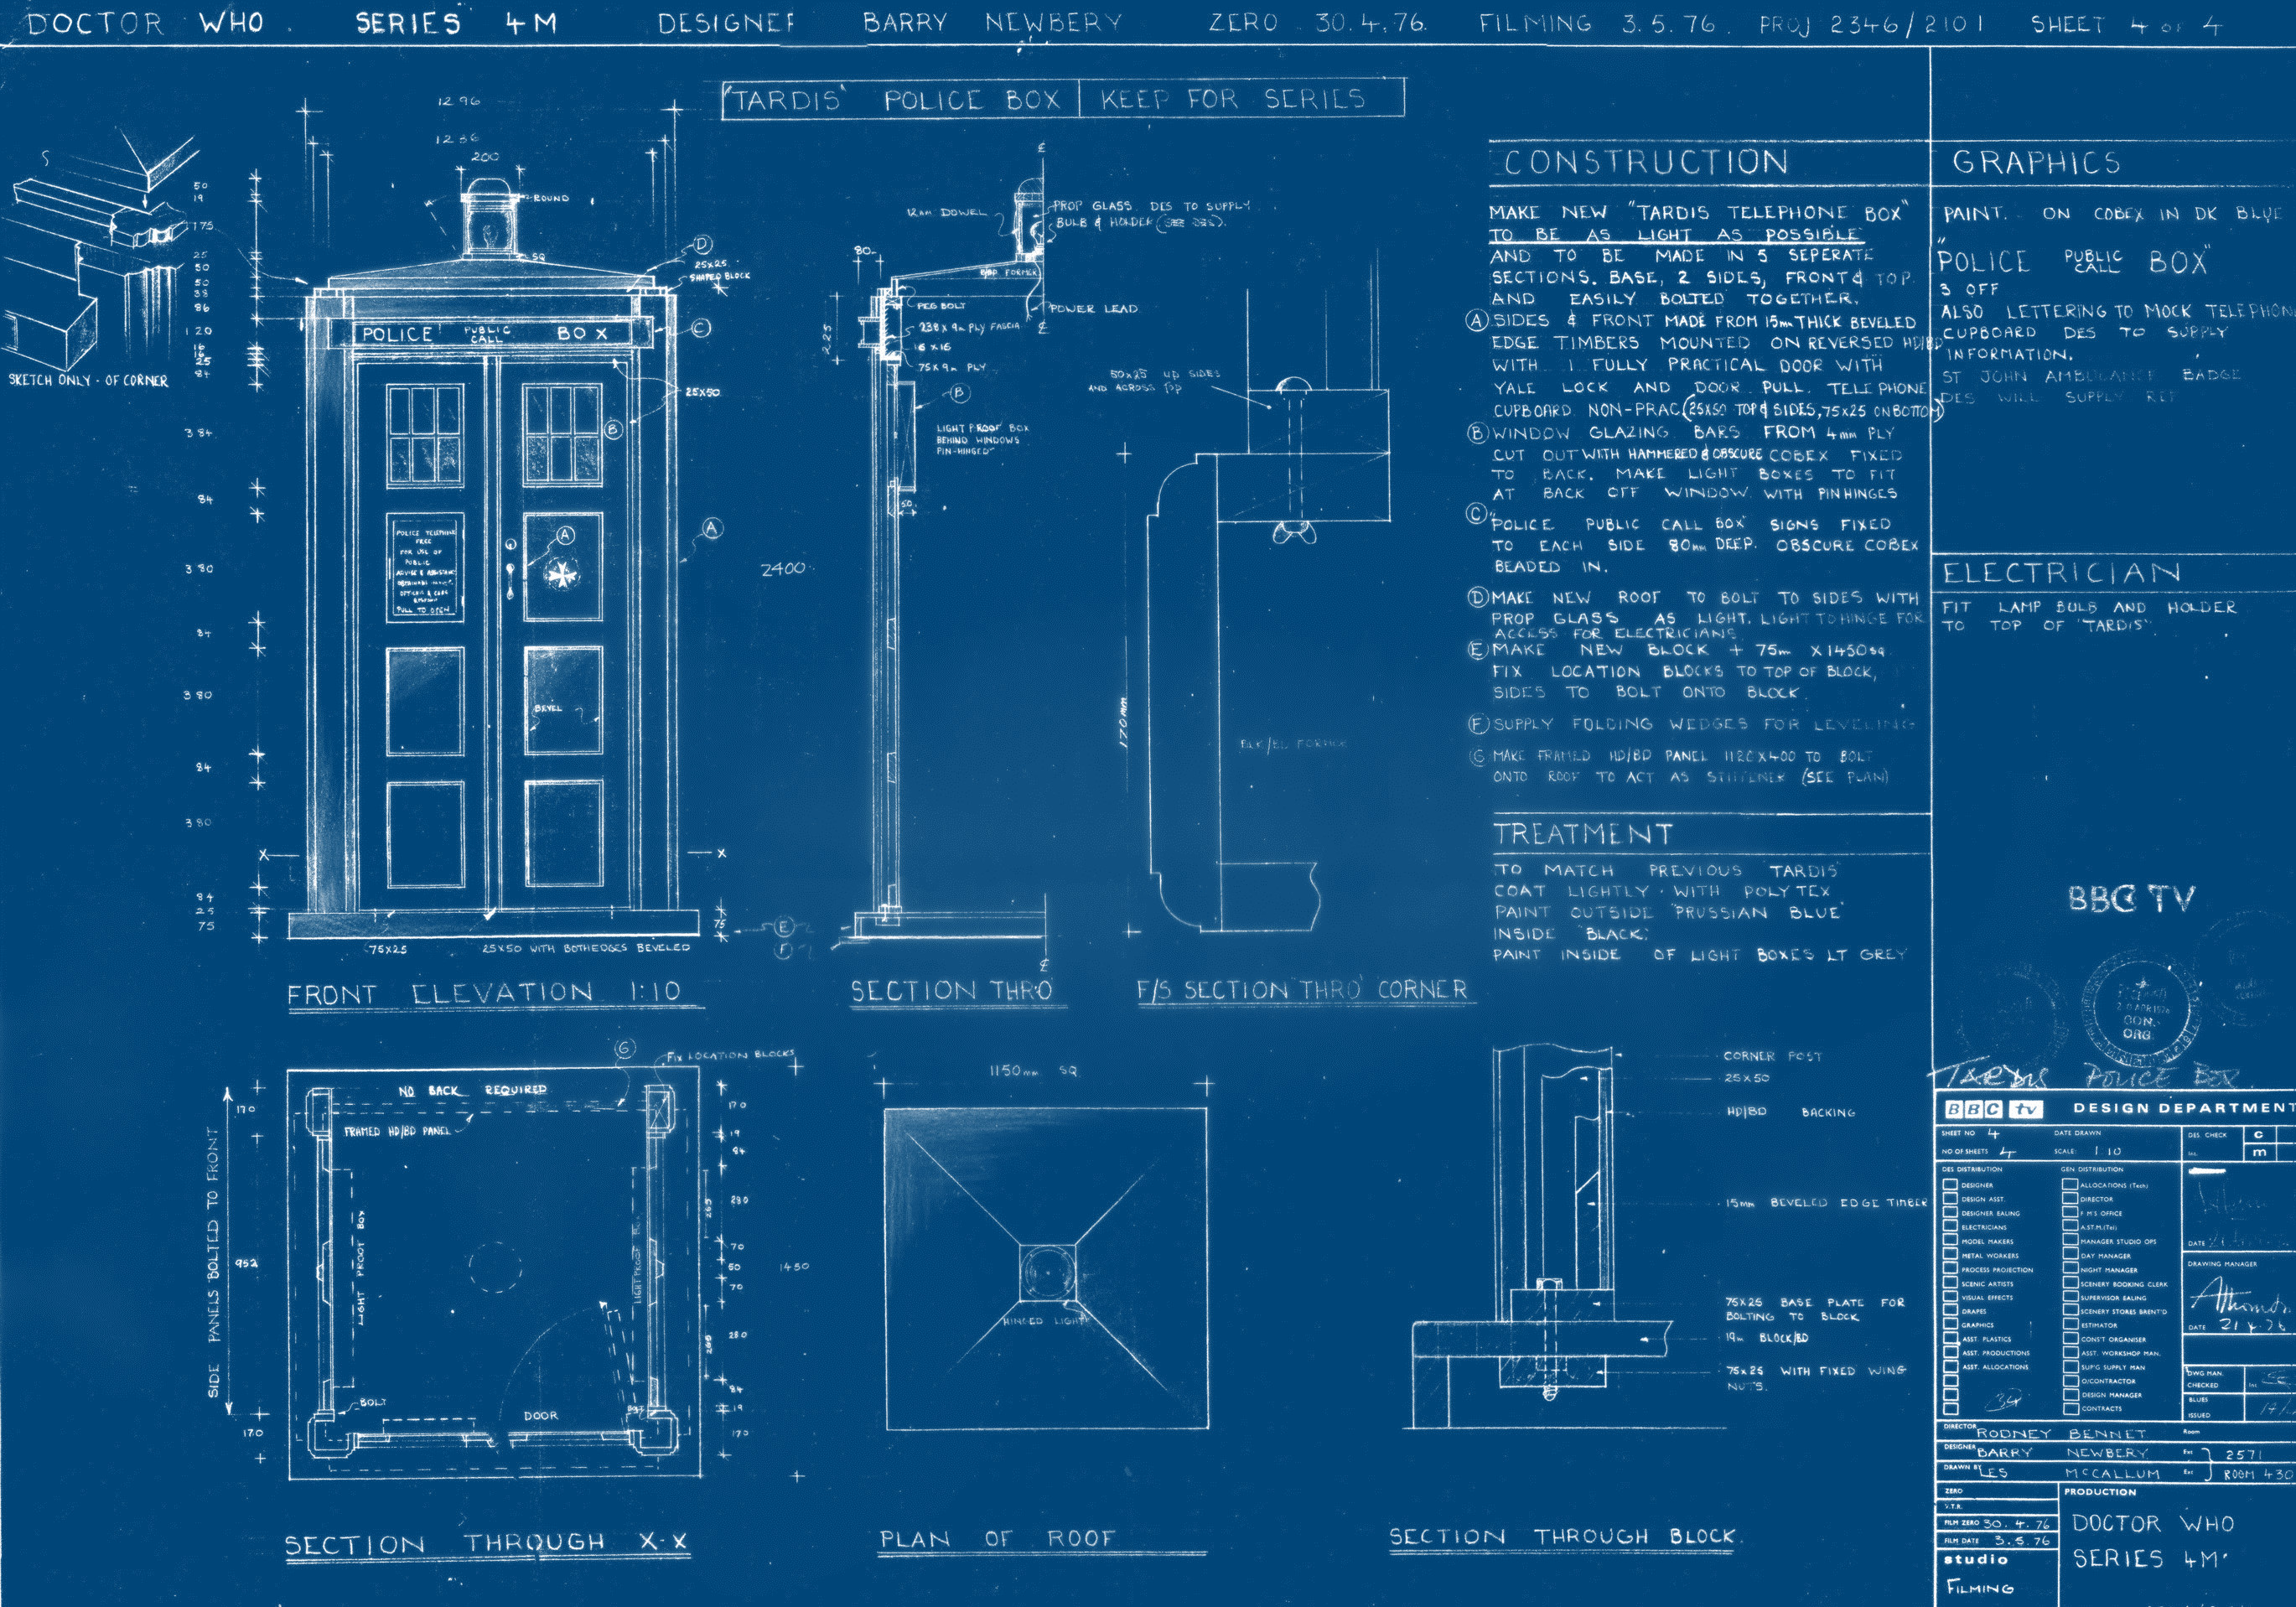 2739x1917 [] Cool TARDIS blueprint wallpaper /r/wallpapers ...